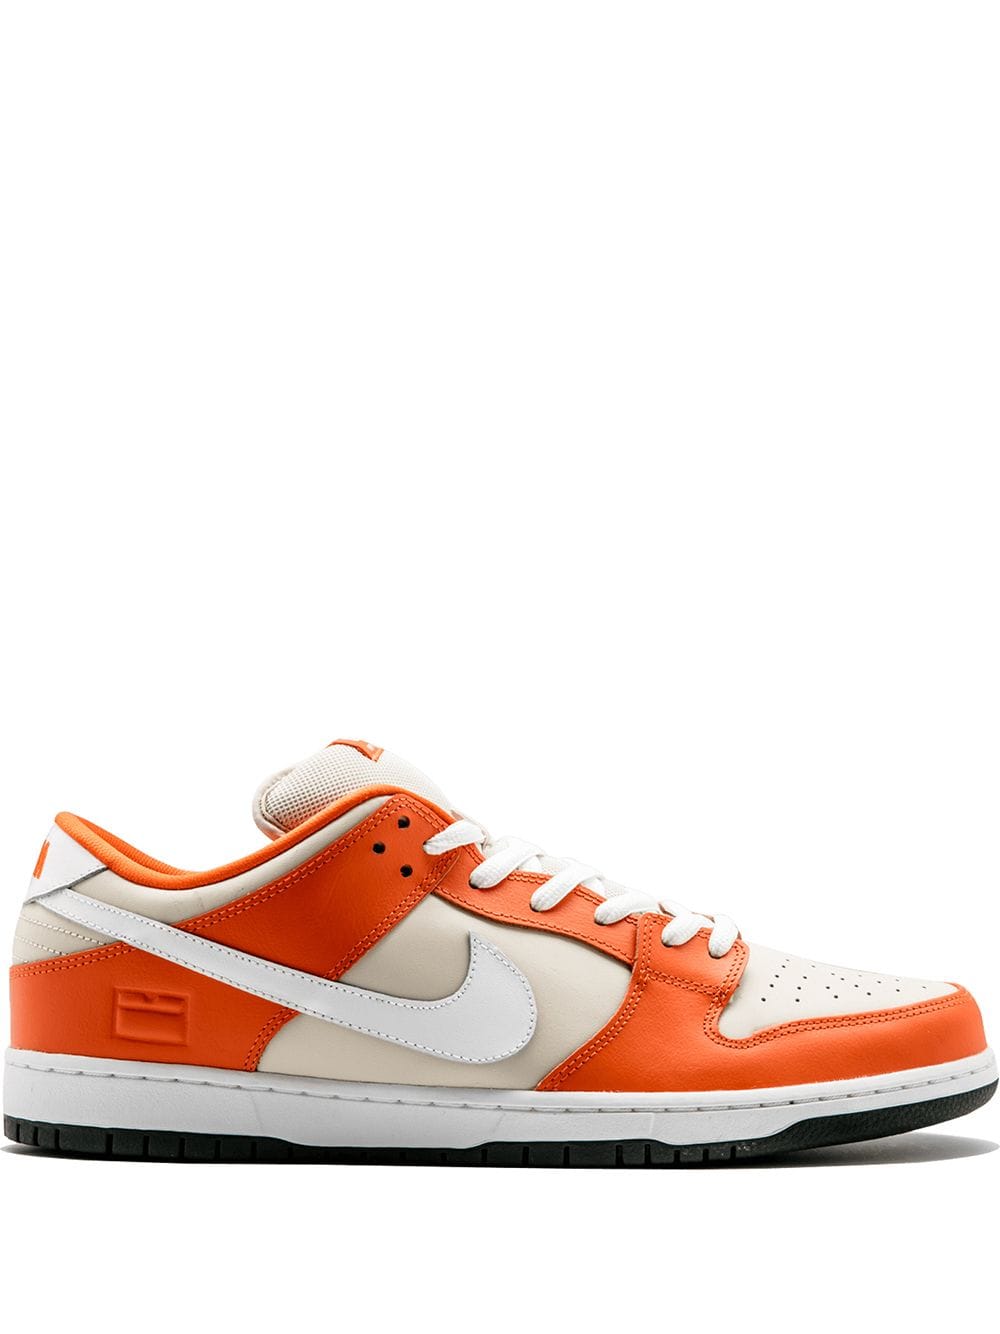 Nike - Dunk Low Premium SB sneakers - men - Polyester/Leather/Rubber - 8.5 - Orange